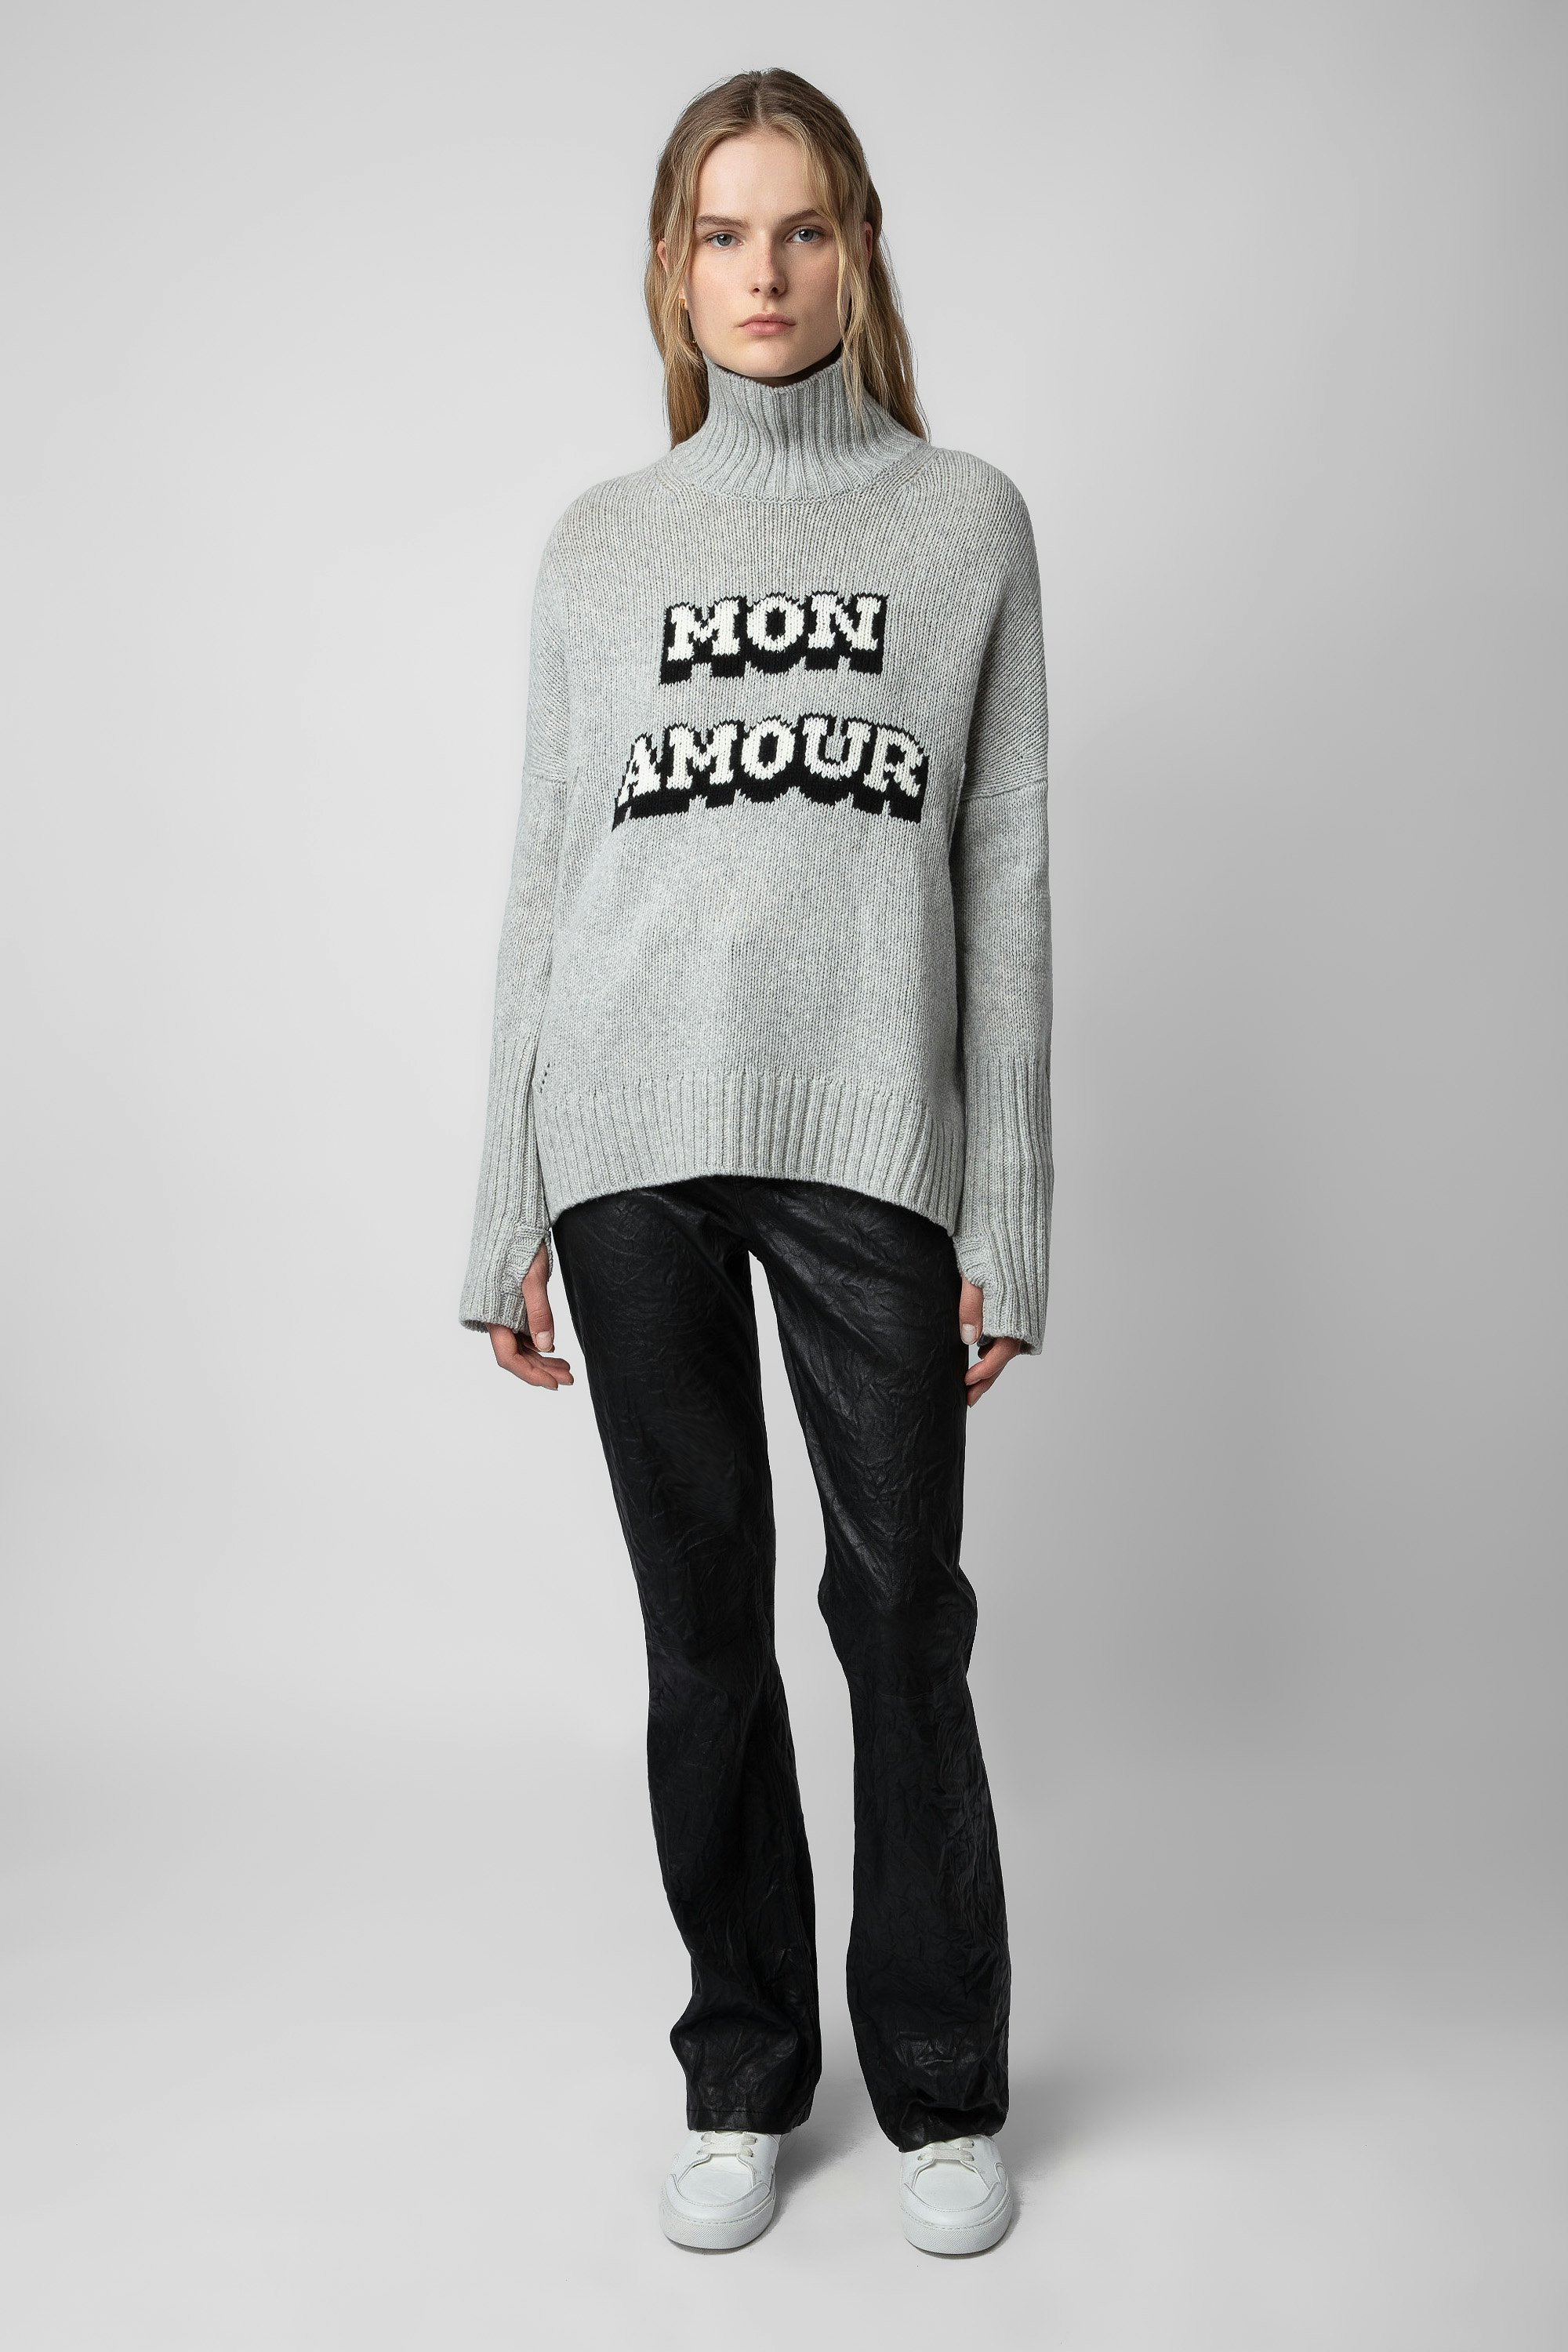 Alma Mon Amour Jumper - Women’s grey merino wool jumper with mock neckline and intarsia jacquard “Mon Amour” slogan.